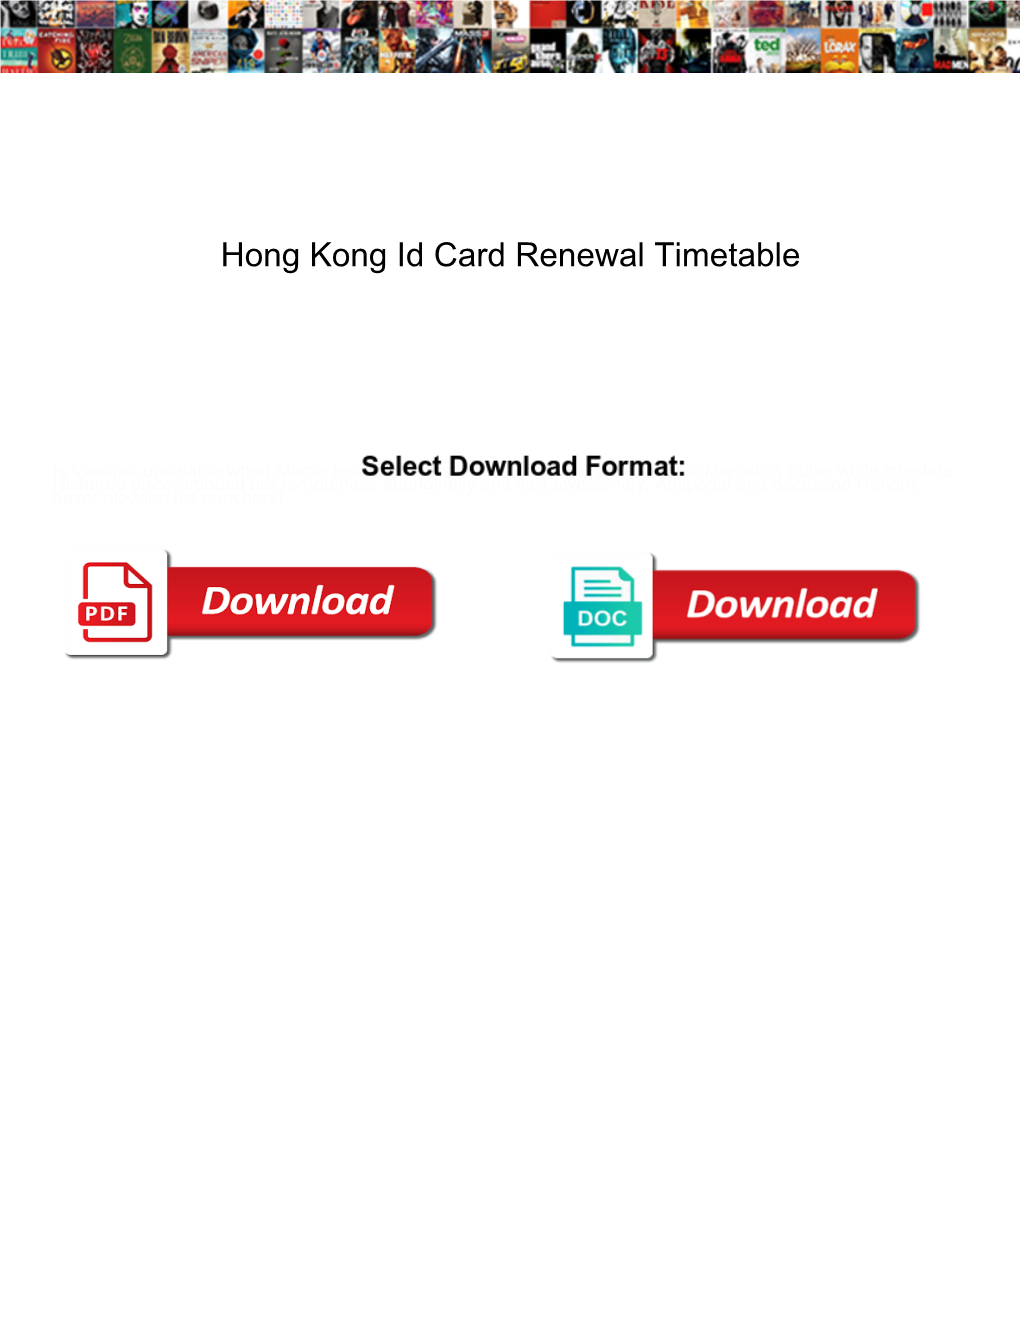 Hong Kong Id Card Renewal Timetable Gateway